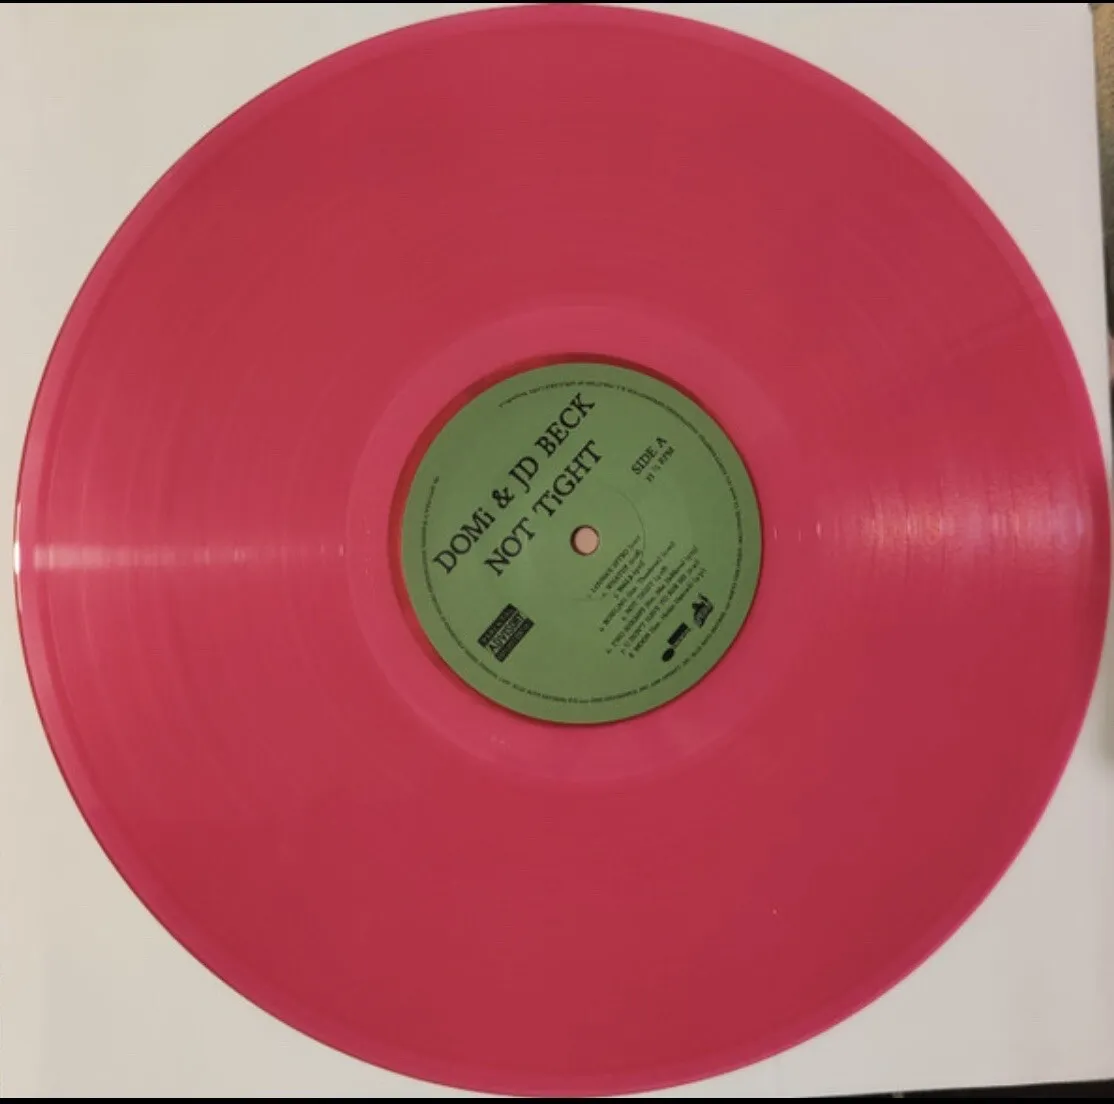 Domi & JD Beck - Not Tight - Pink Vinyl LP - 1st Press - Webstore Exclusive